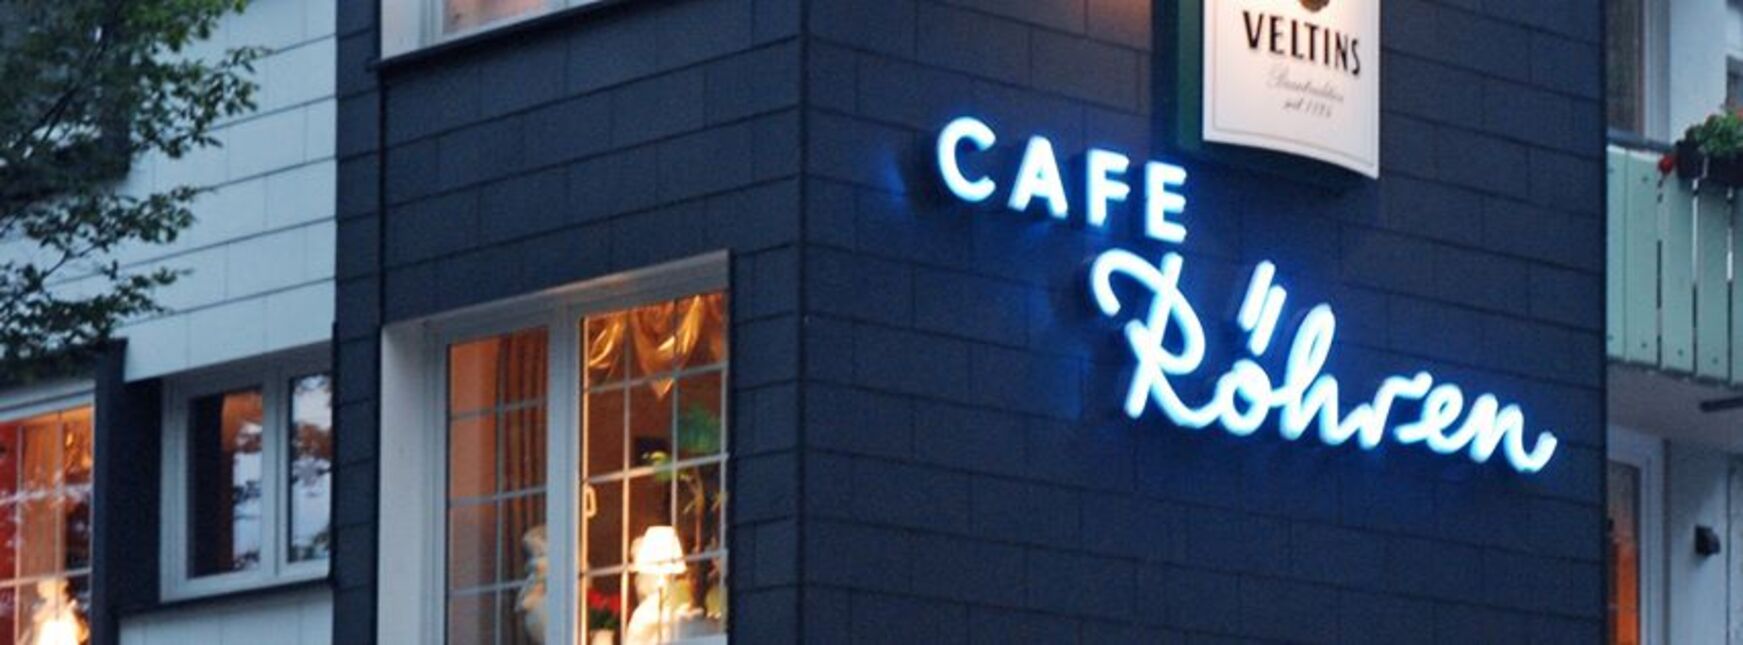 Café Röhren